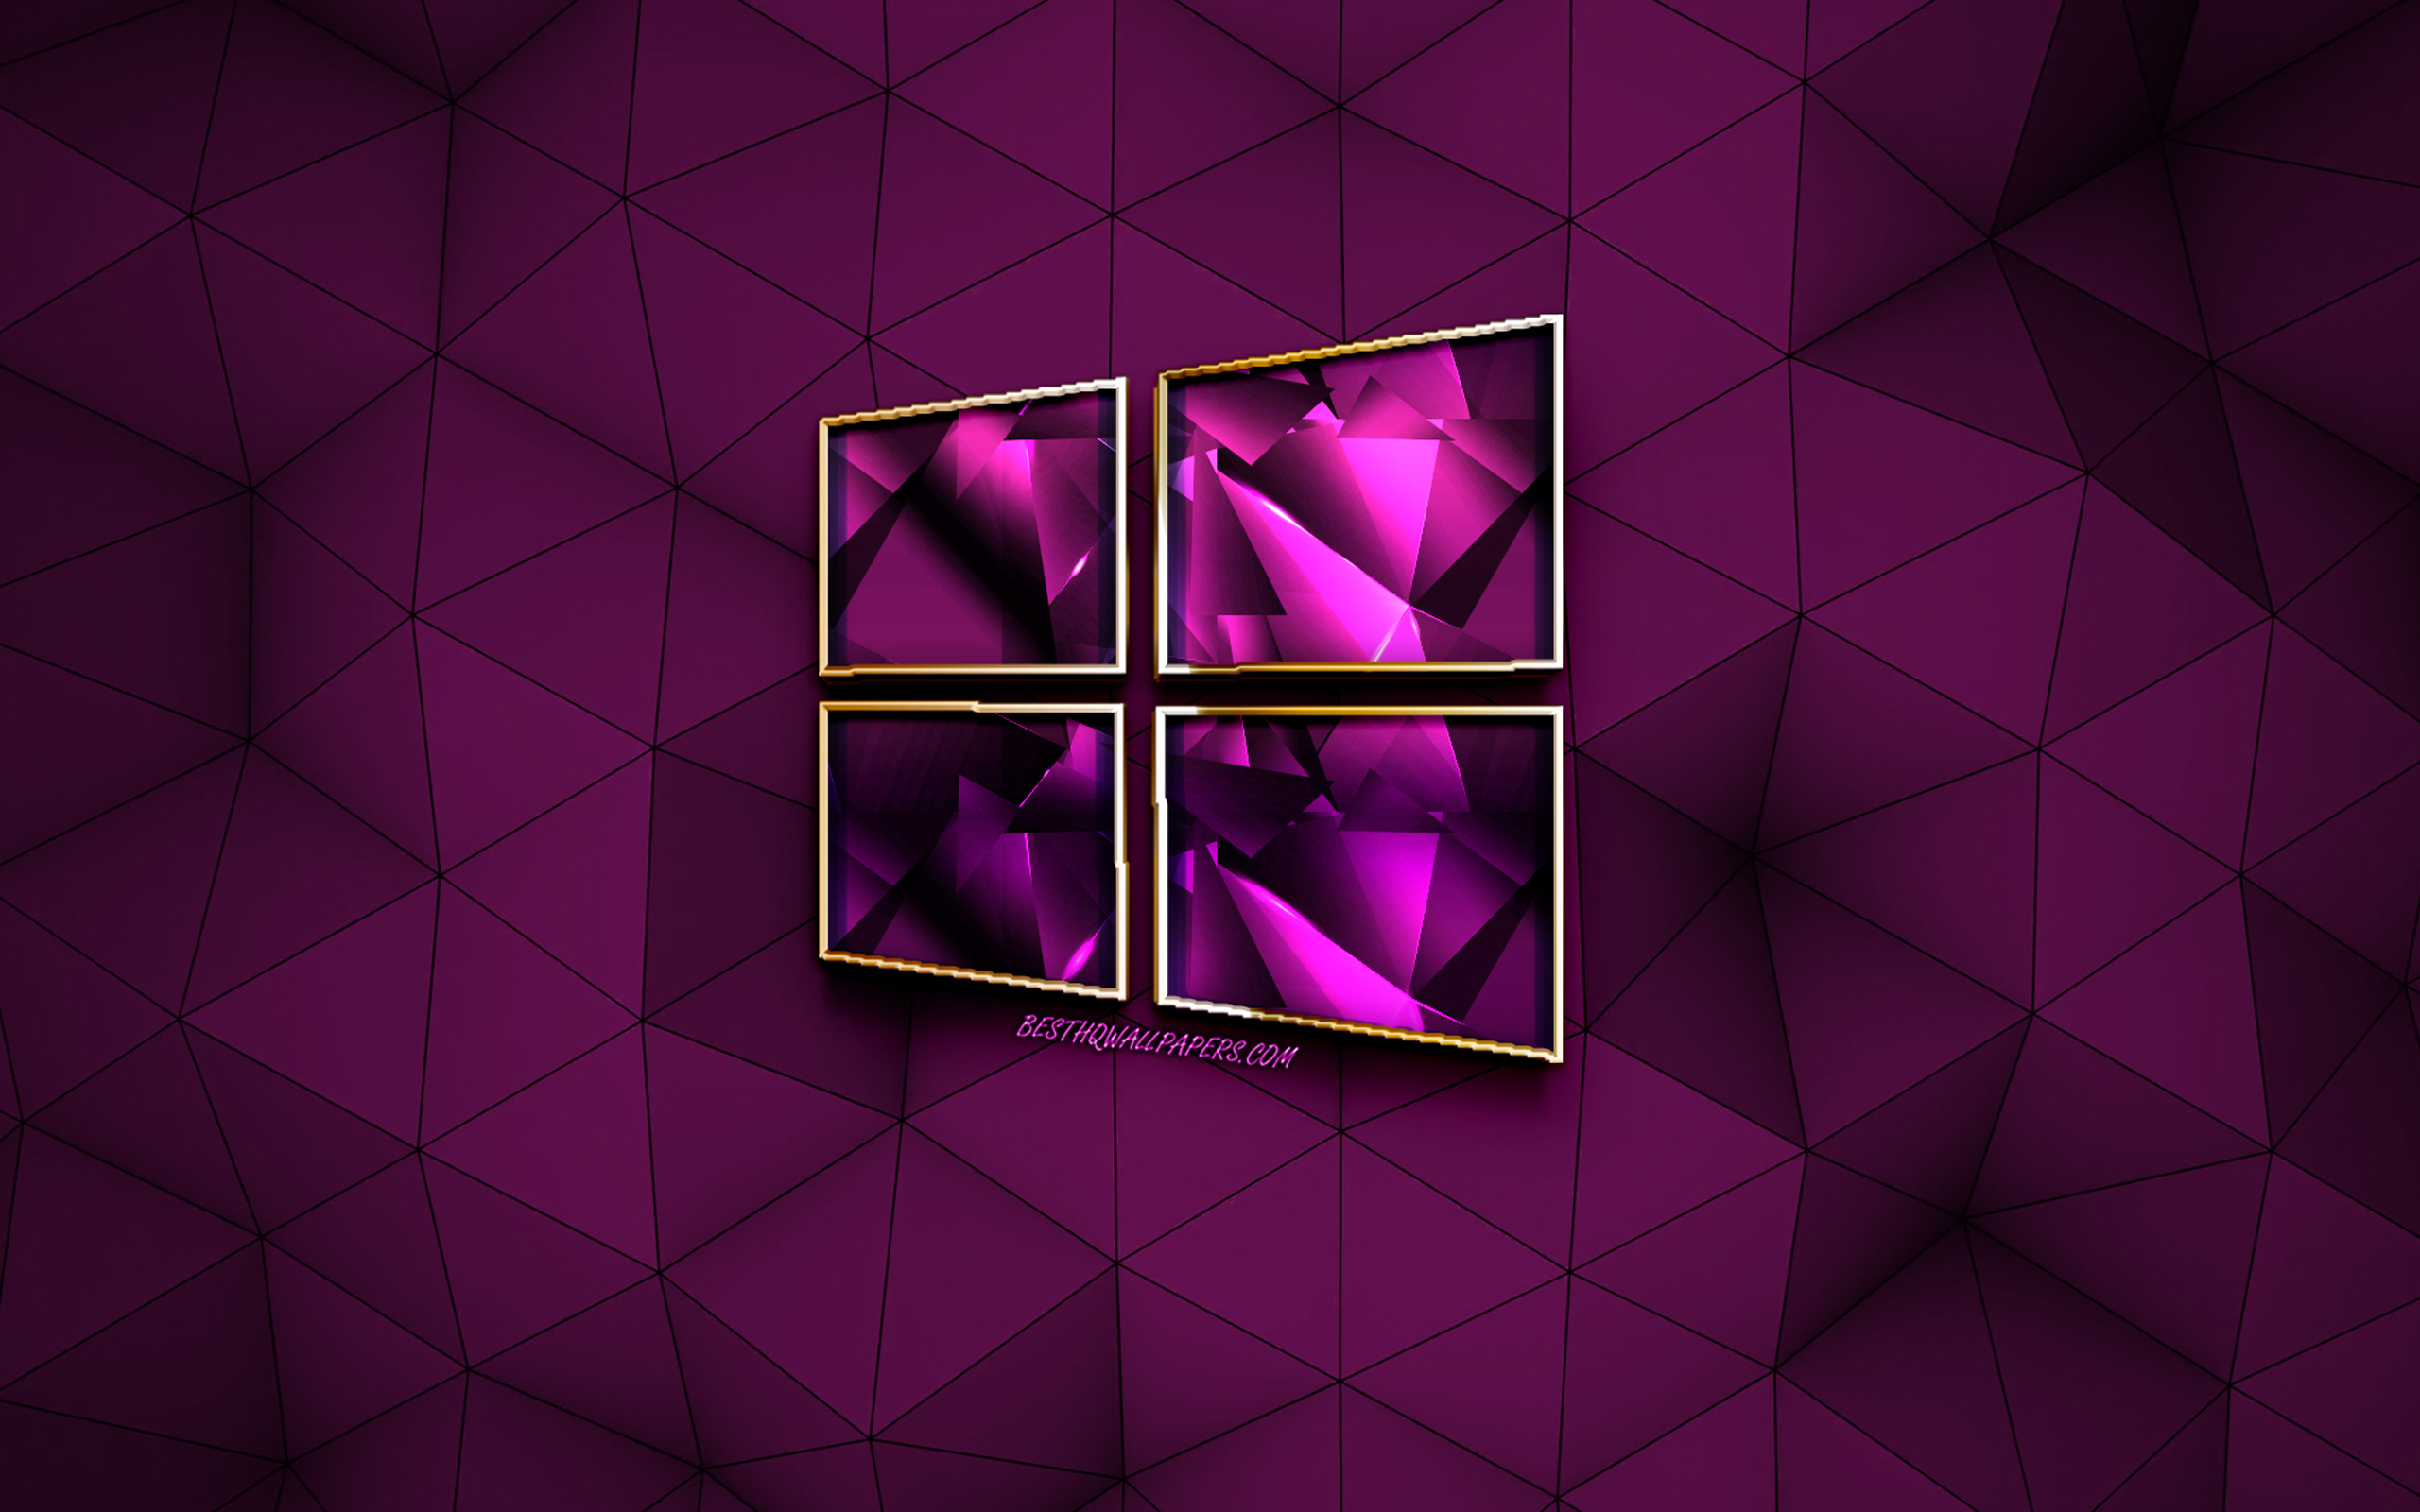 Download wallpaper Windows logo, purple diamond logo, creative art, purple background, emblem, Windows for desktop with resolution 2560x1600. High Quality HD picture wallpaper